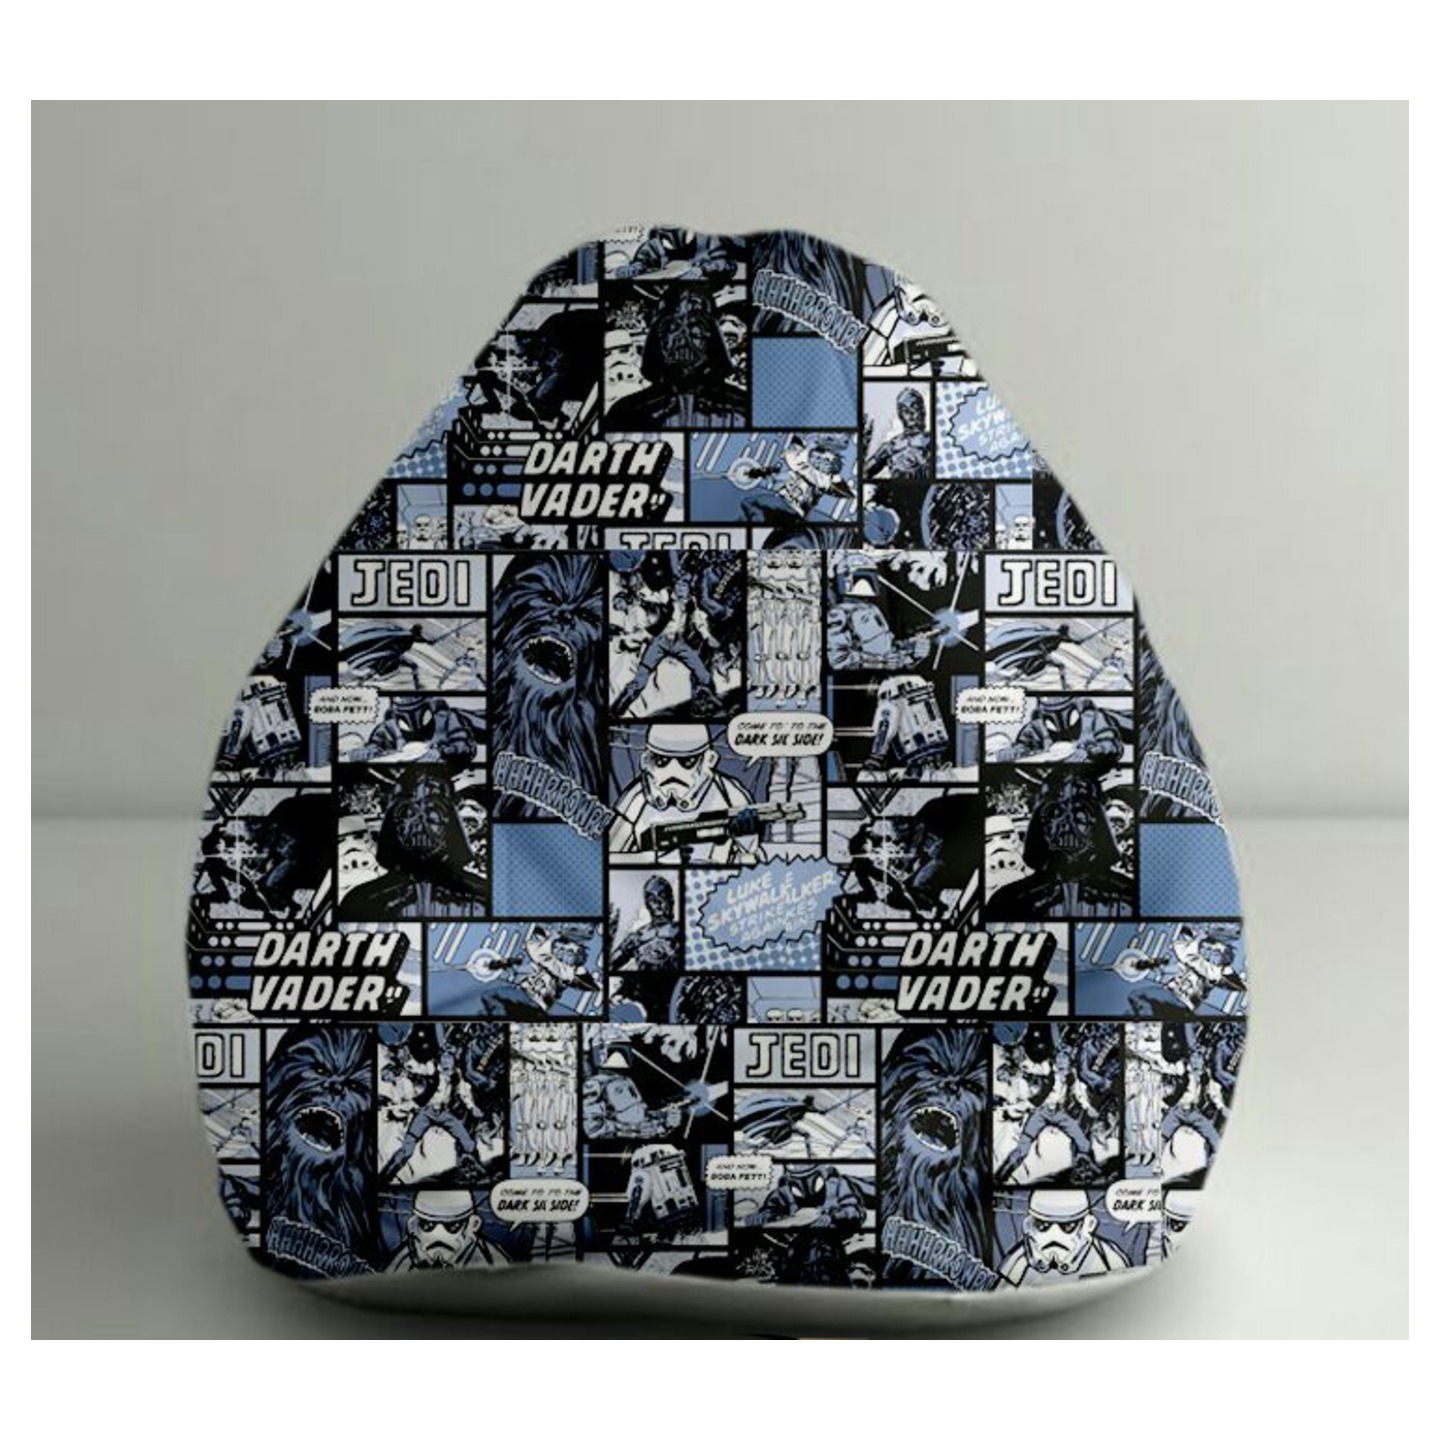 VFR XXL Bean Bag With Beans Printed In Blue & Black Colour